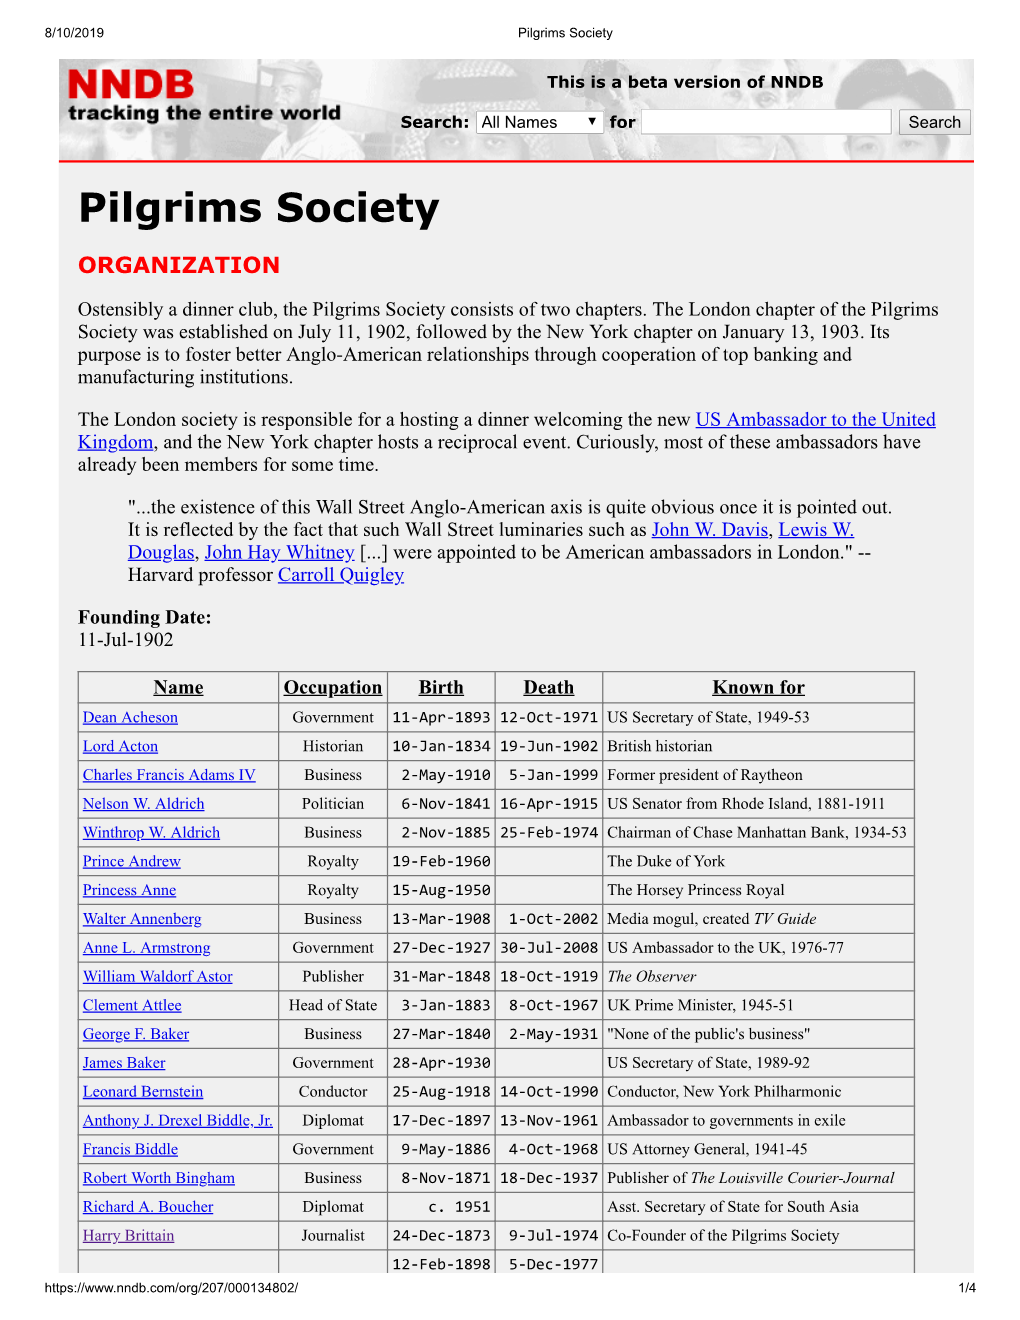 Pilgrims Society